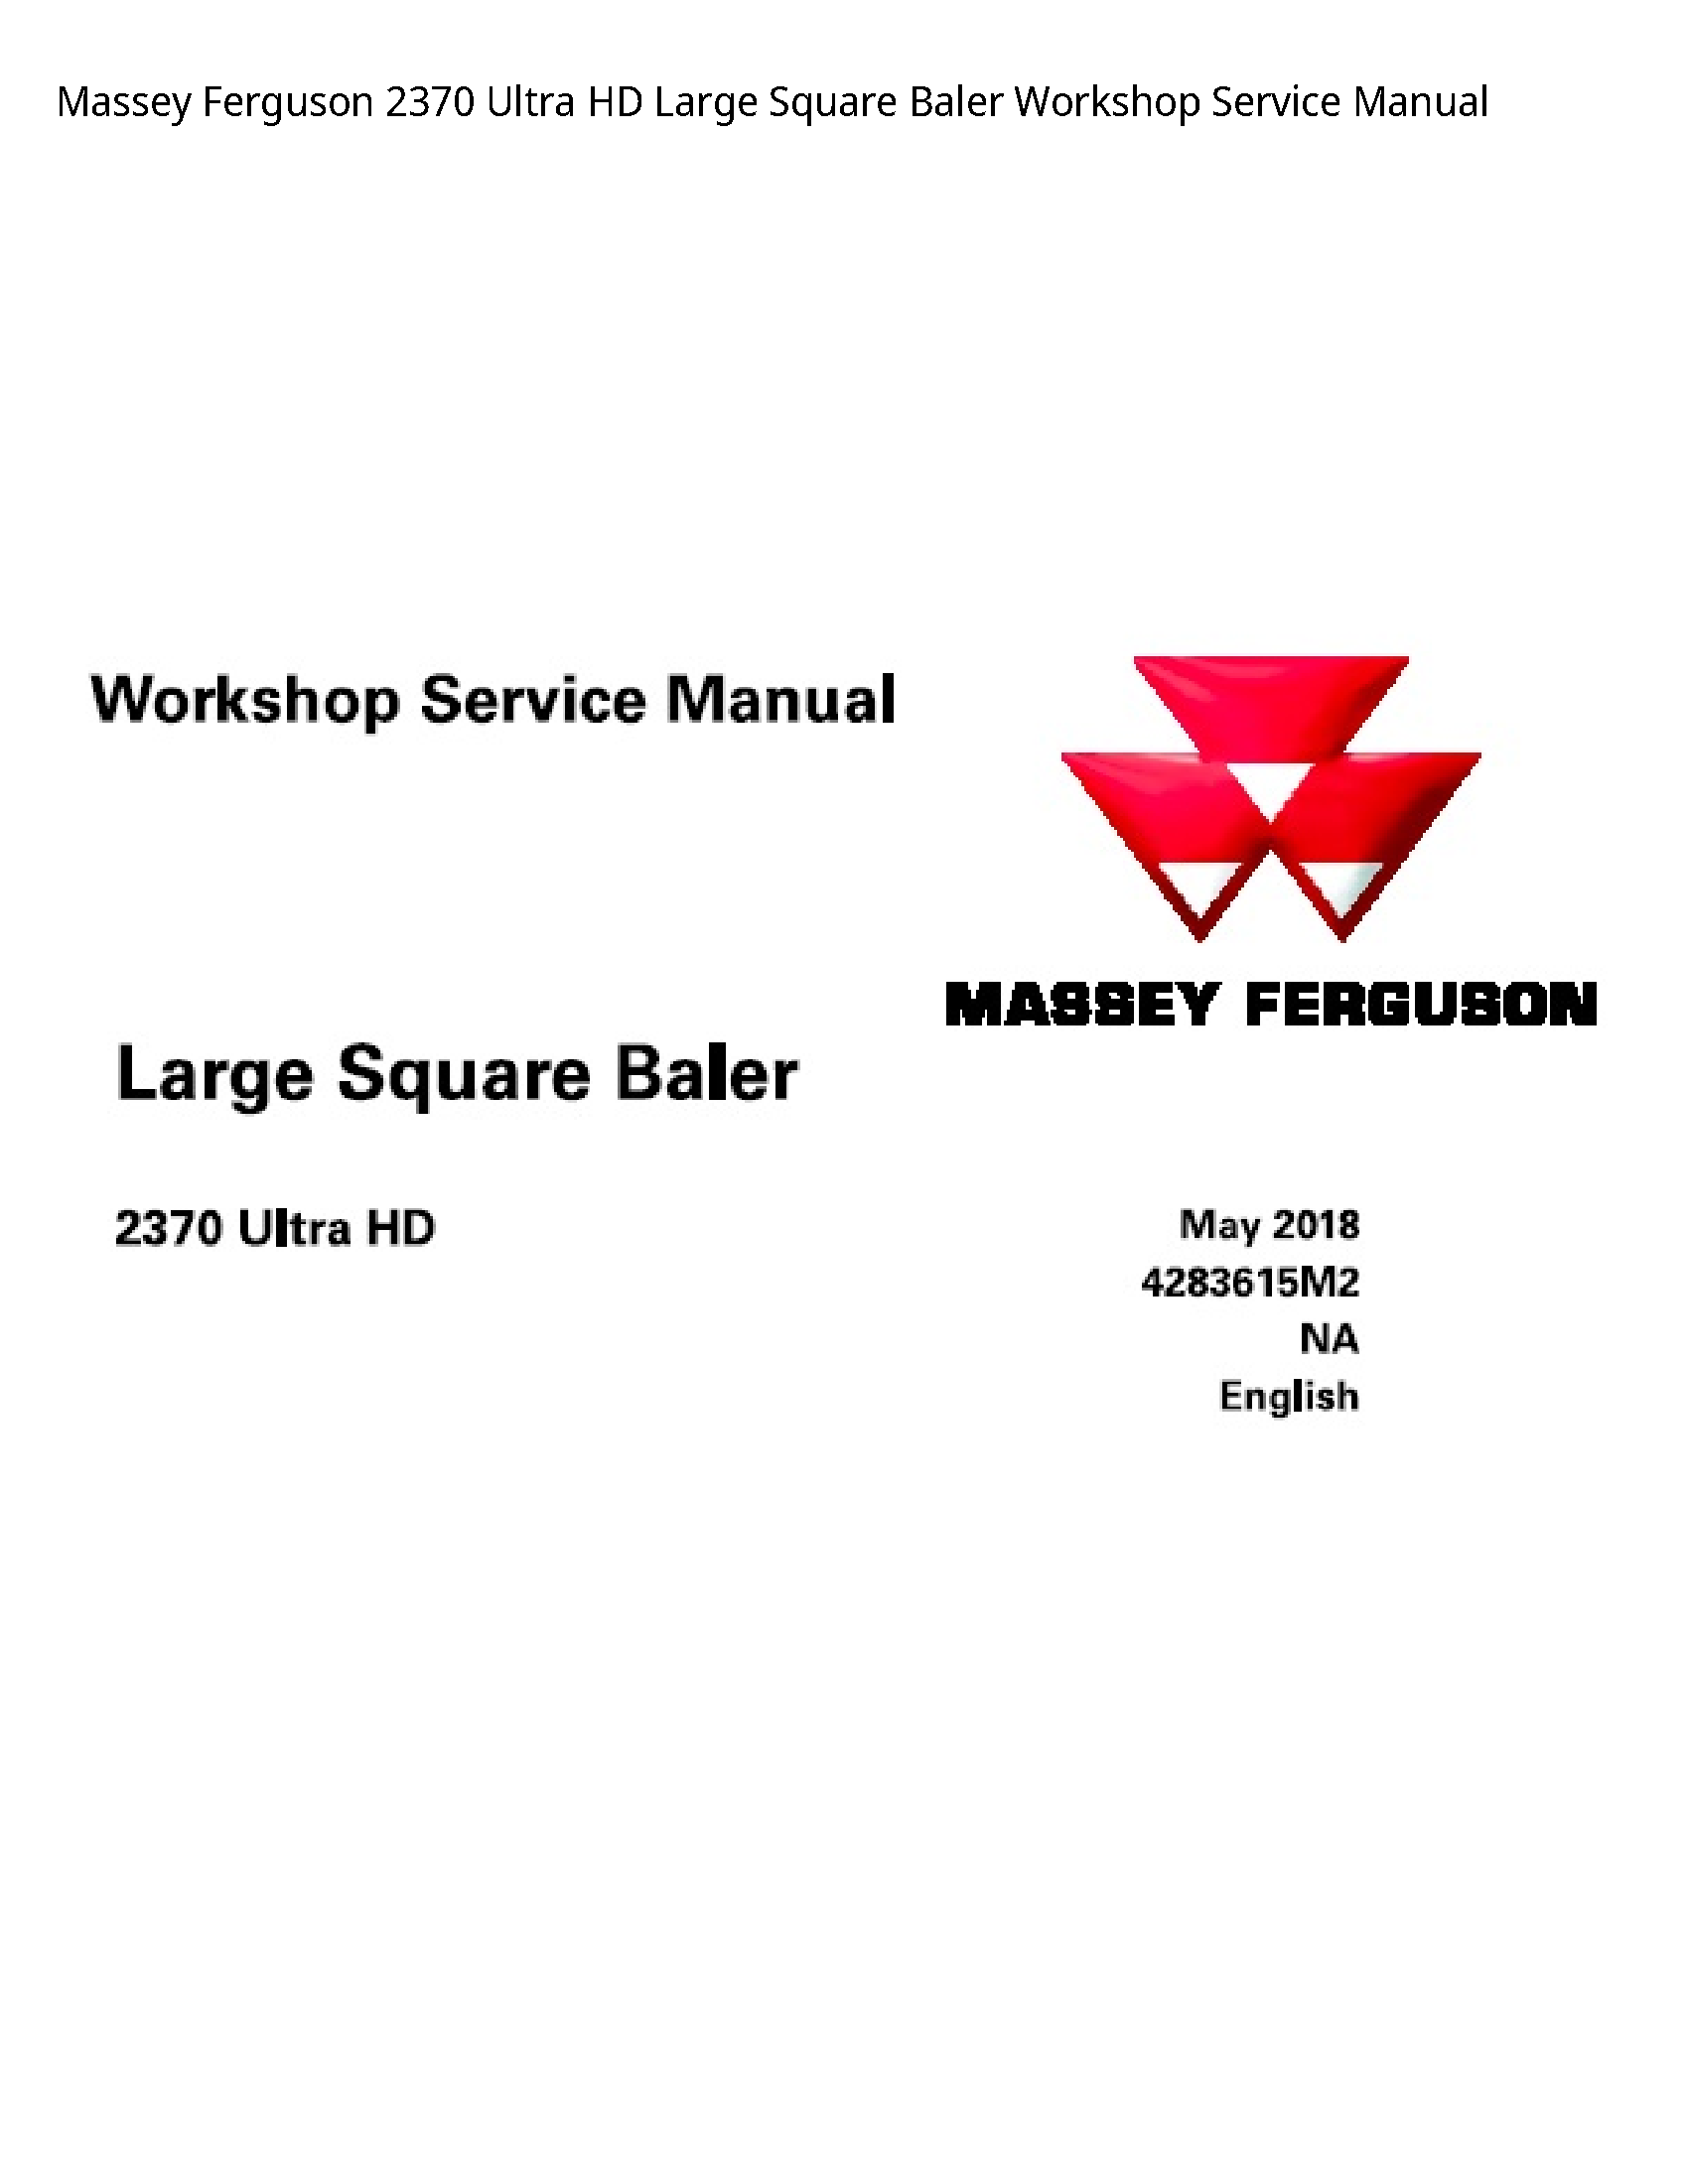 Massey Ferguson 2370 Ultra HD Large Square Baler Service manual